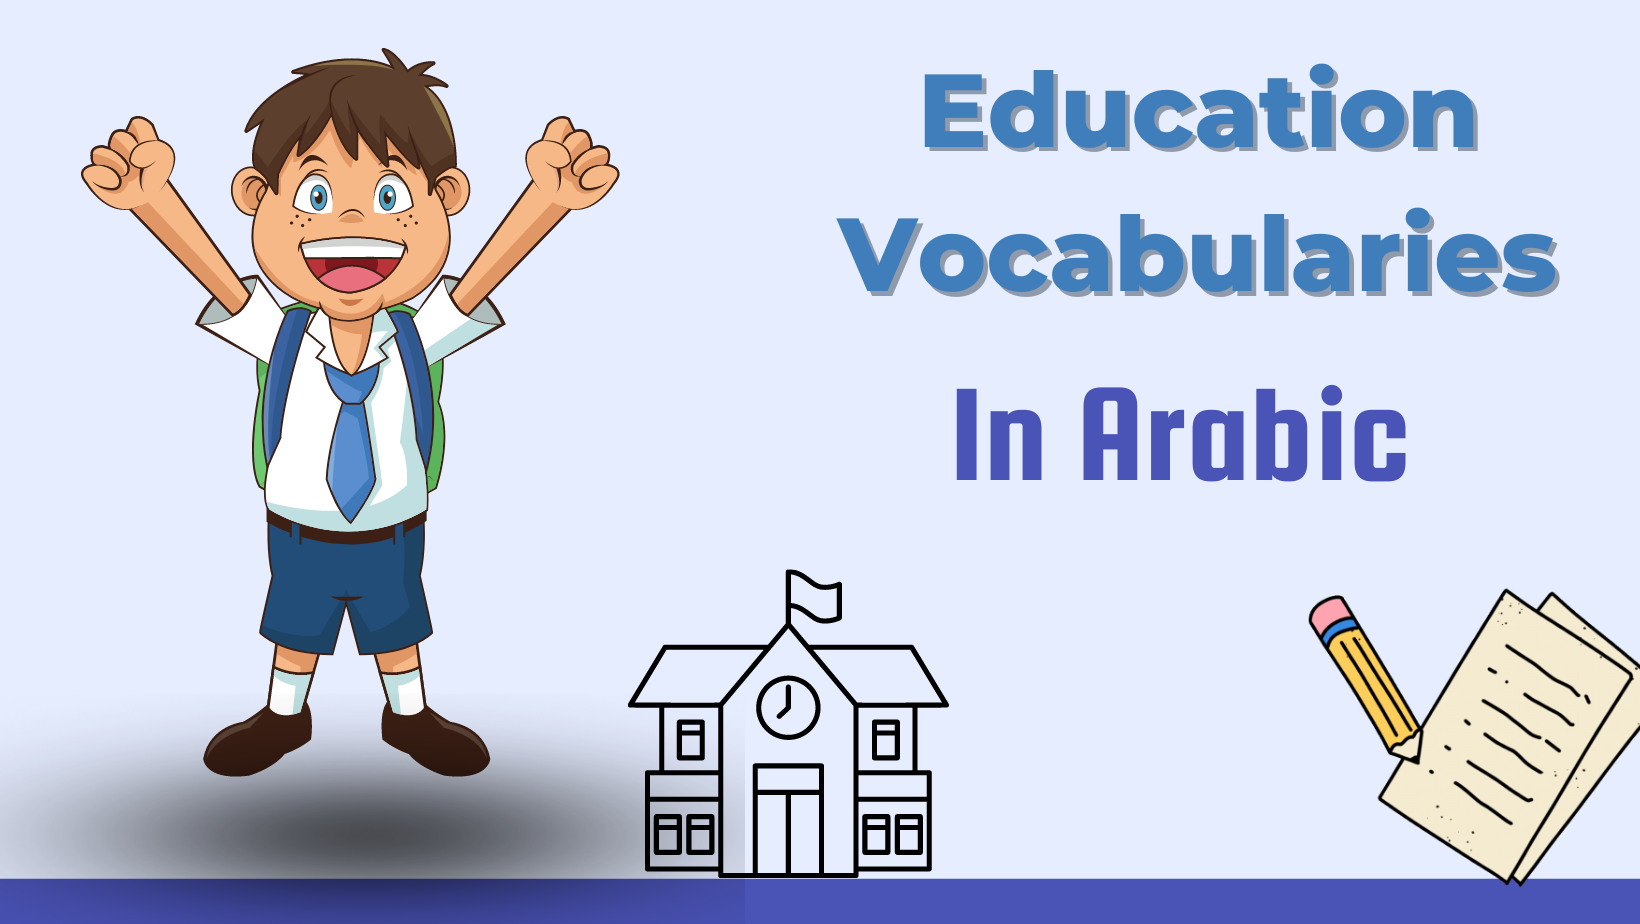 Education Vocabularies in Arabic